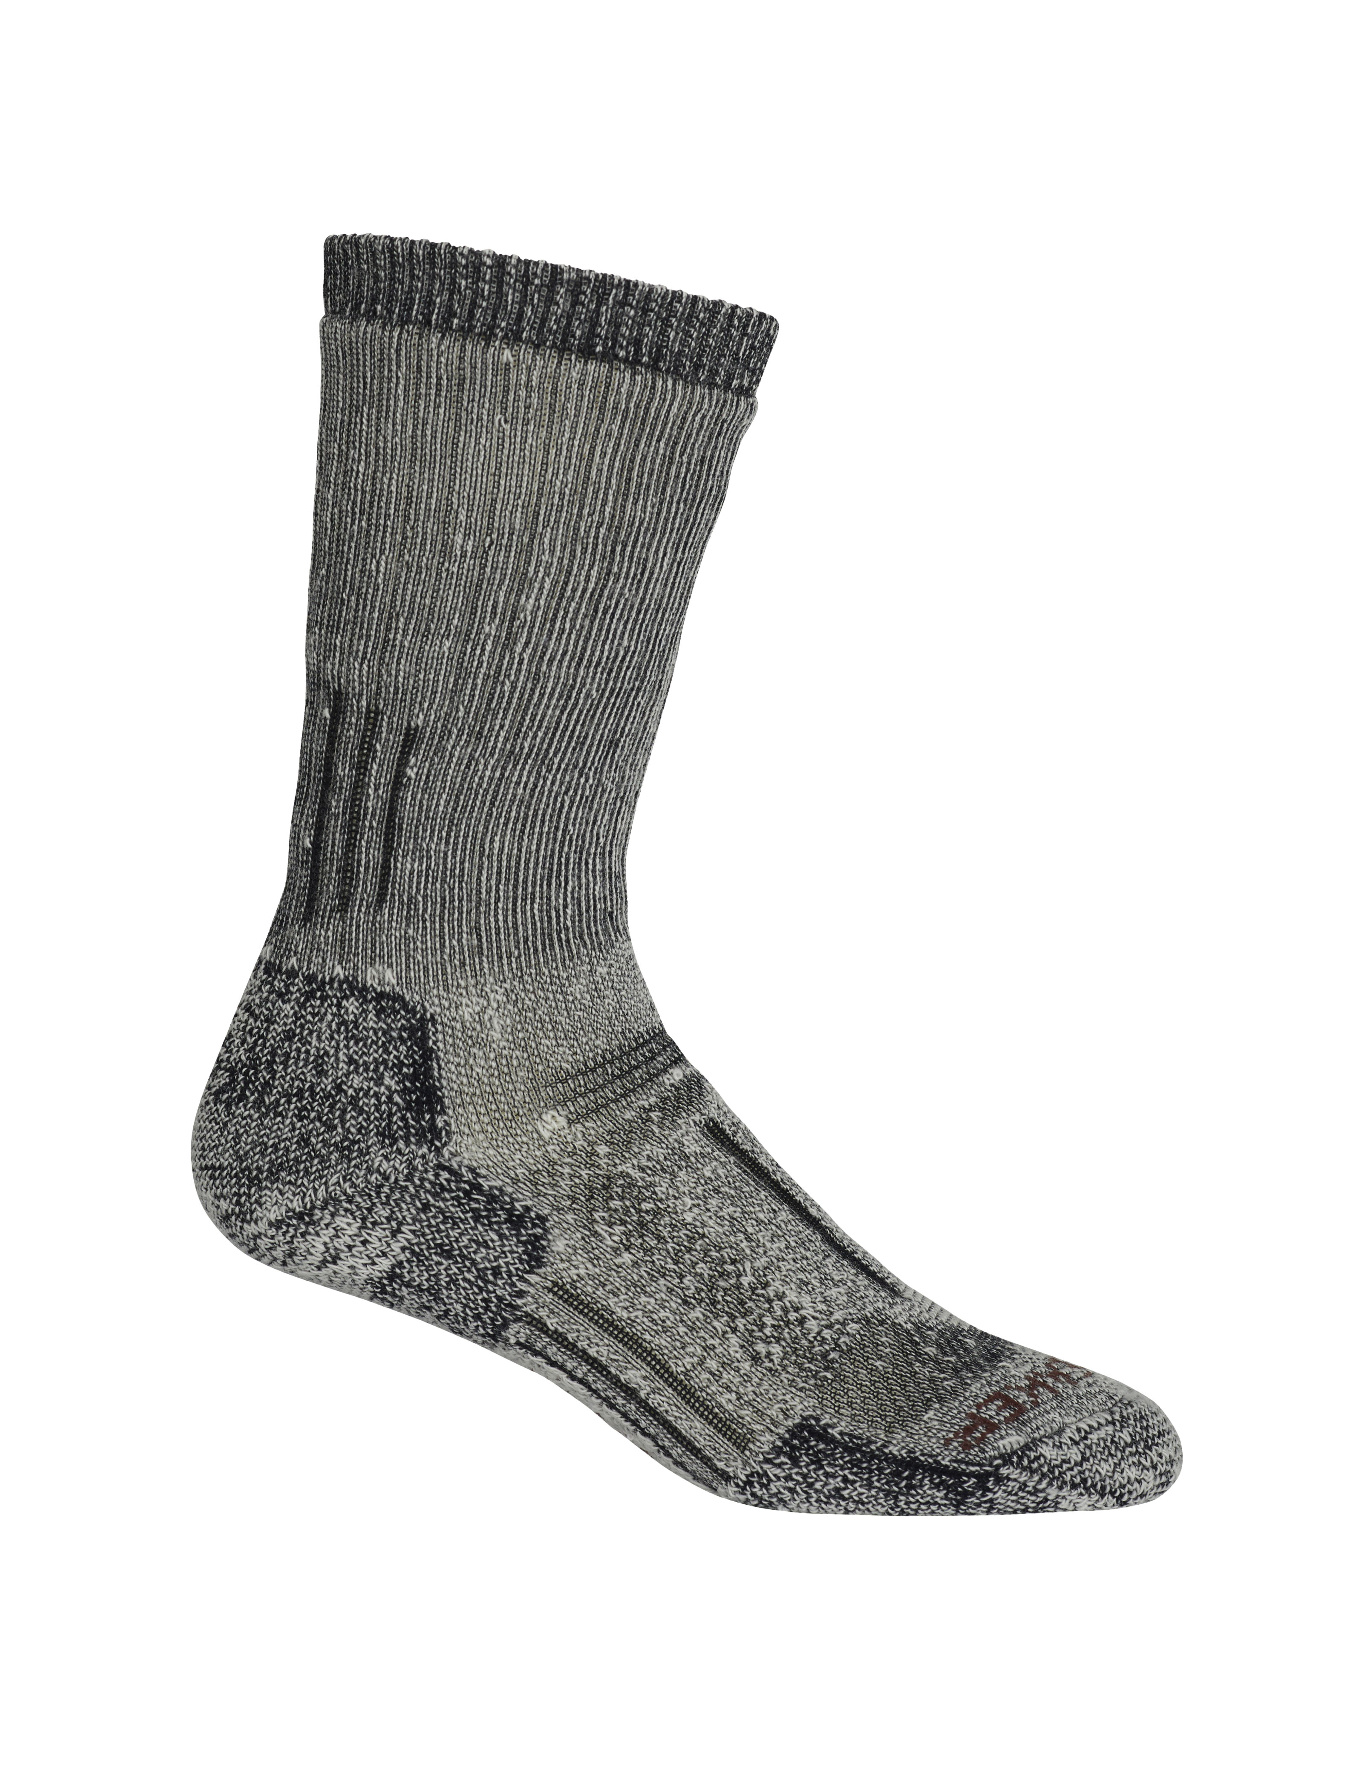 Dámské merino ponožky ICEBREAKER Wmns Mountaineer Mid Calf, Jet Heather/Espresso velikost: 38-40 (M)